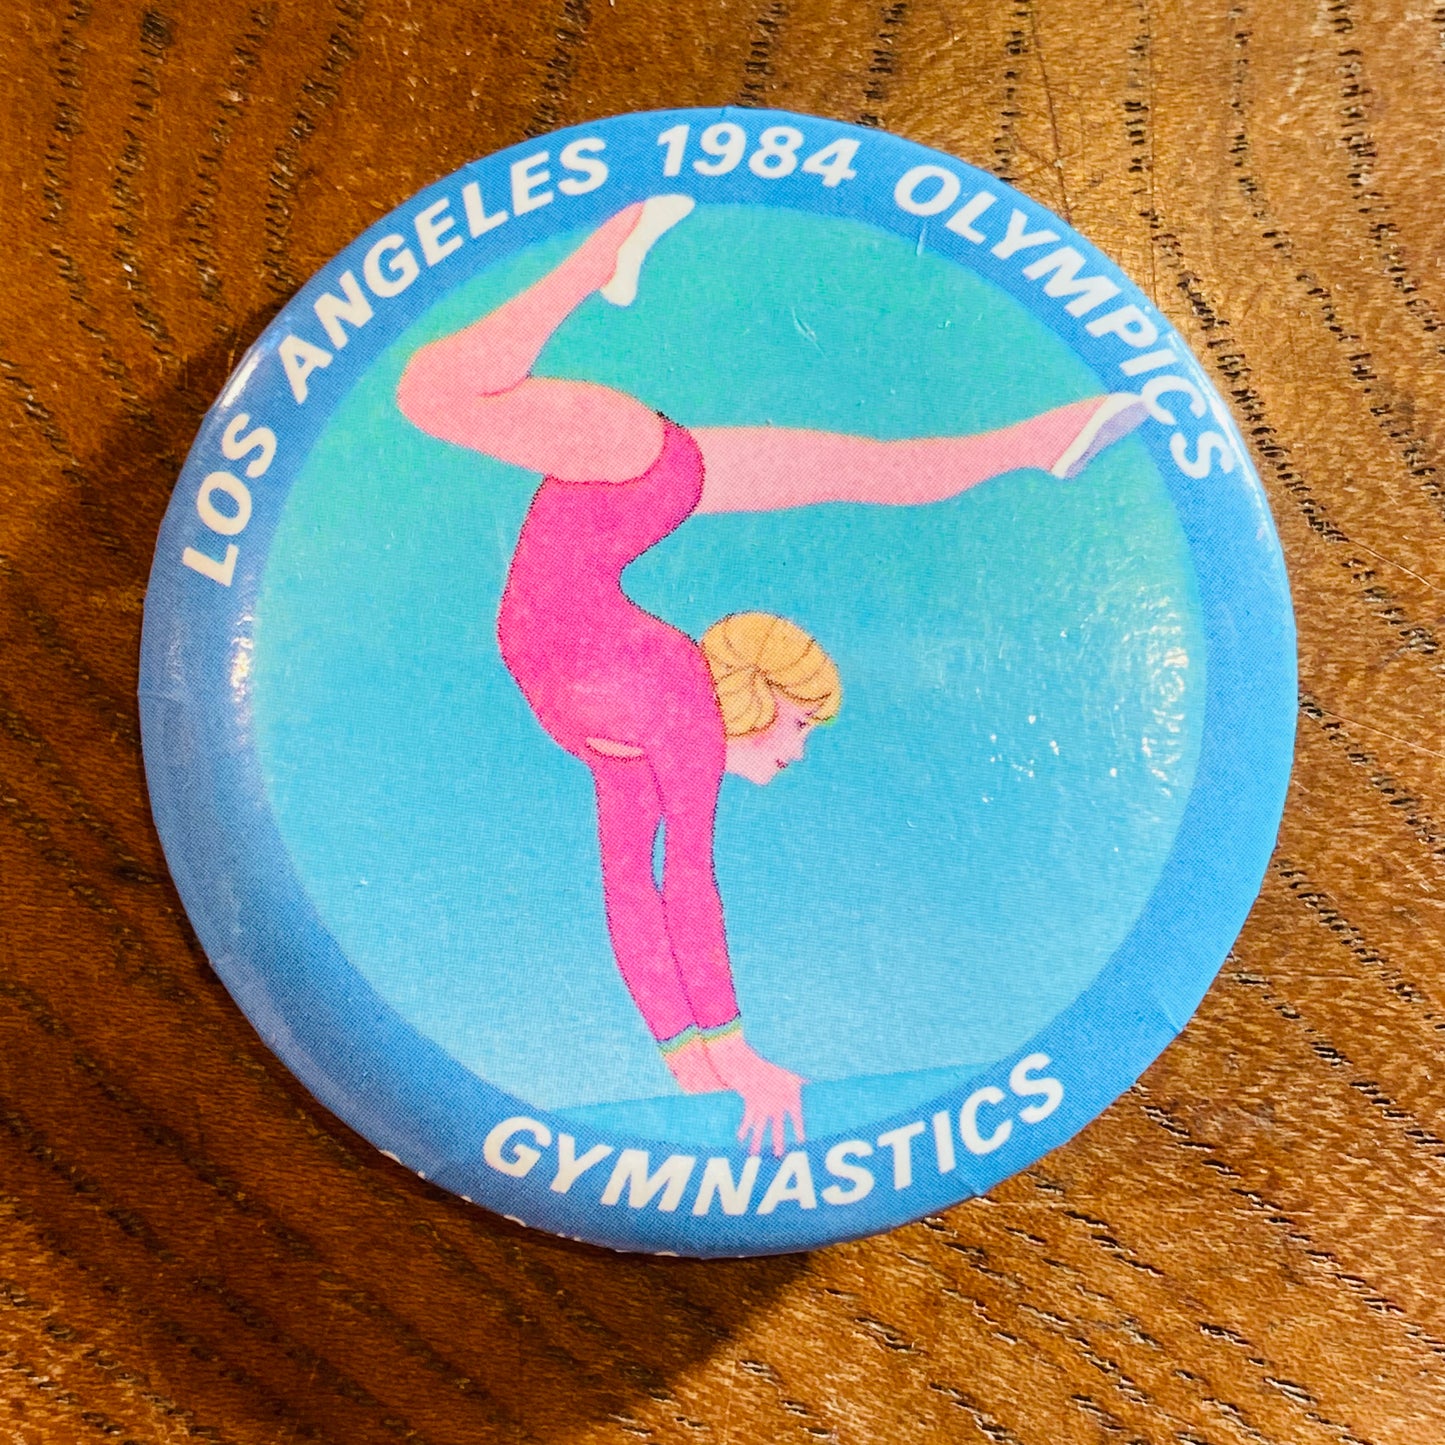 【1984 USA vintage】缶バッジ OLYMPICS